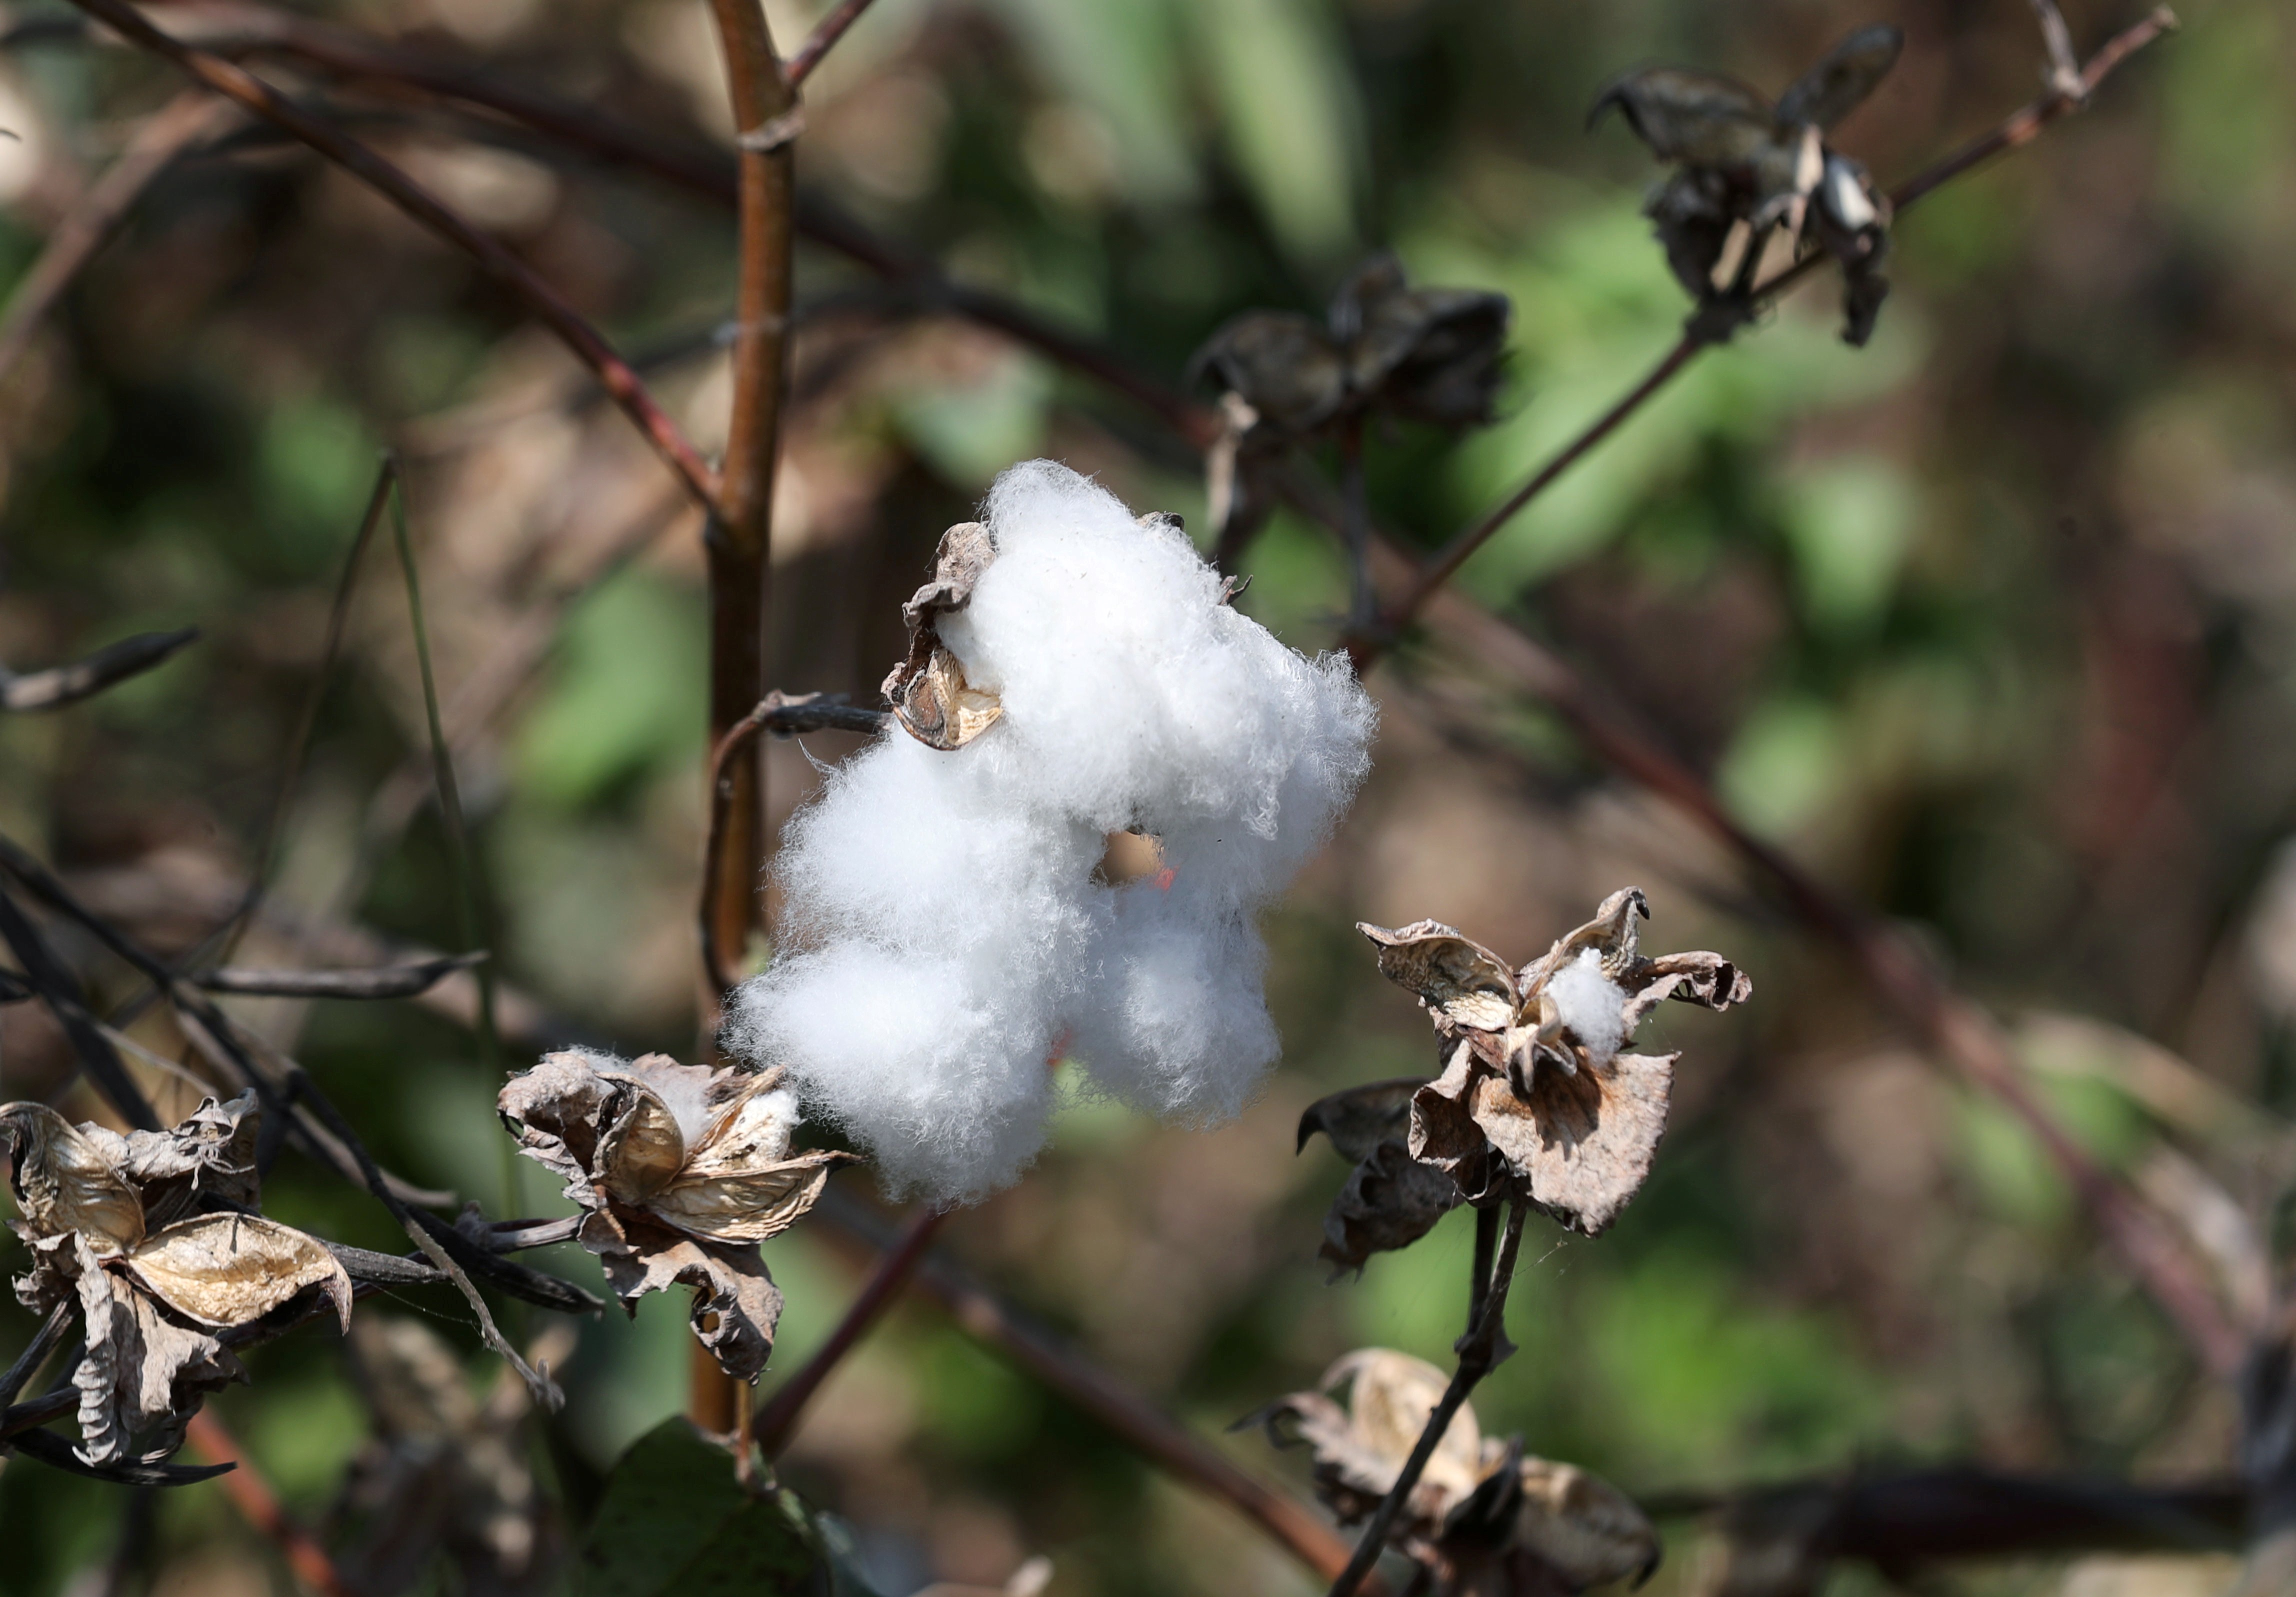 Lavoura de algodão  (Foto: REUTERS/Mohamed Abd El Ghany)